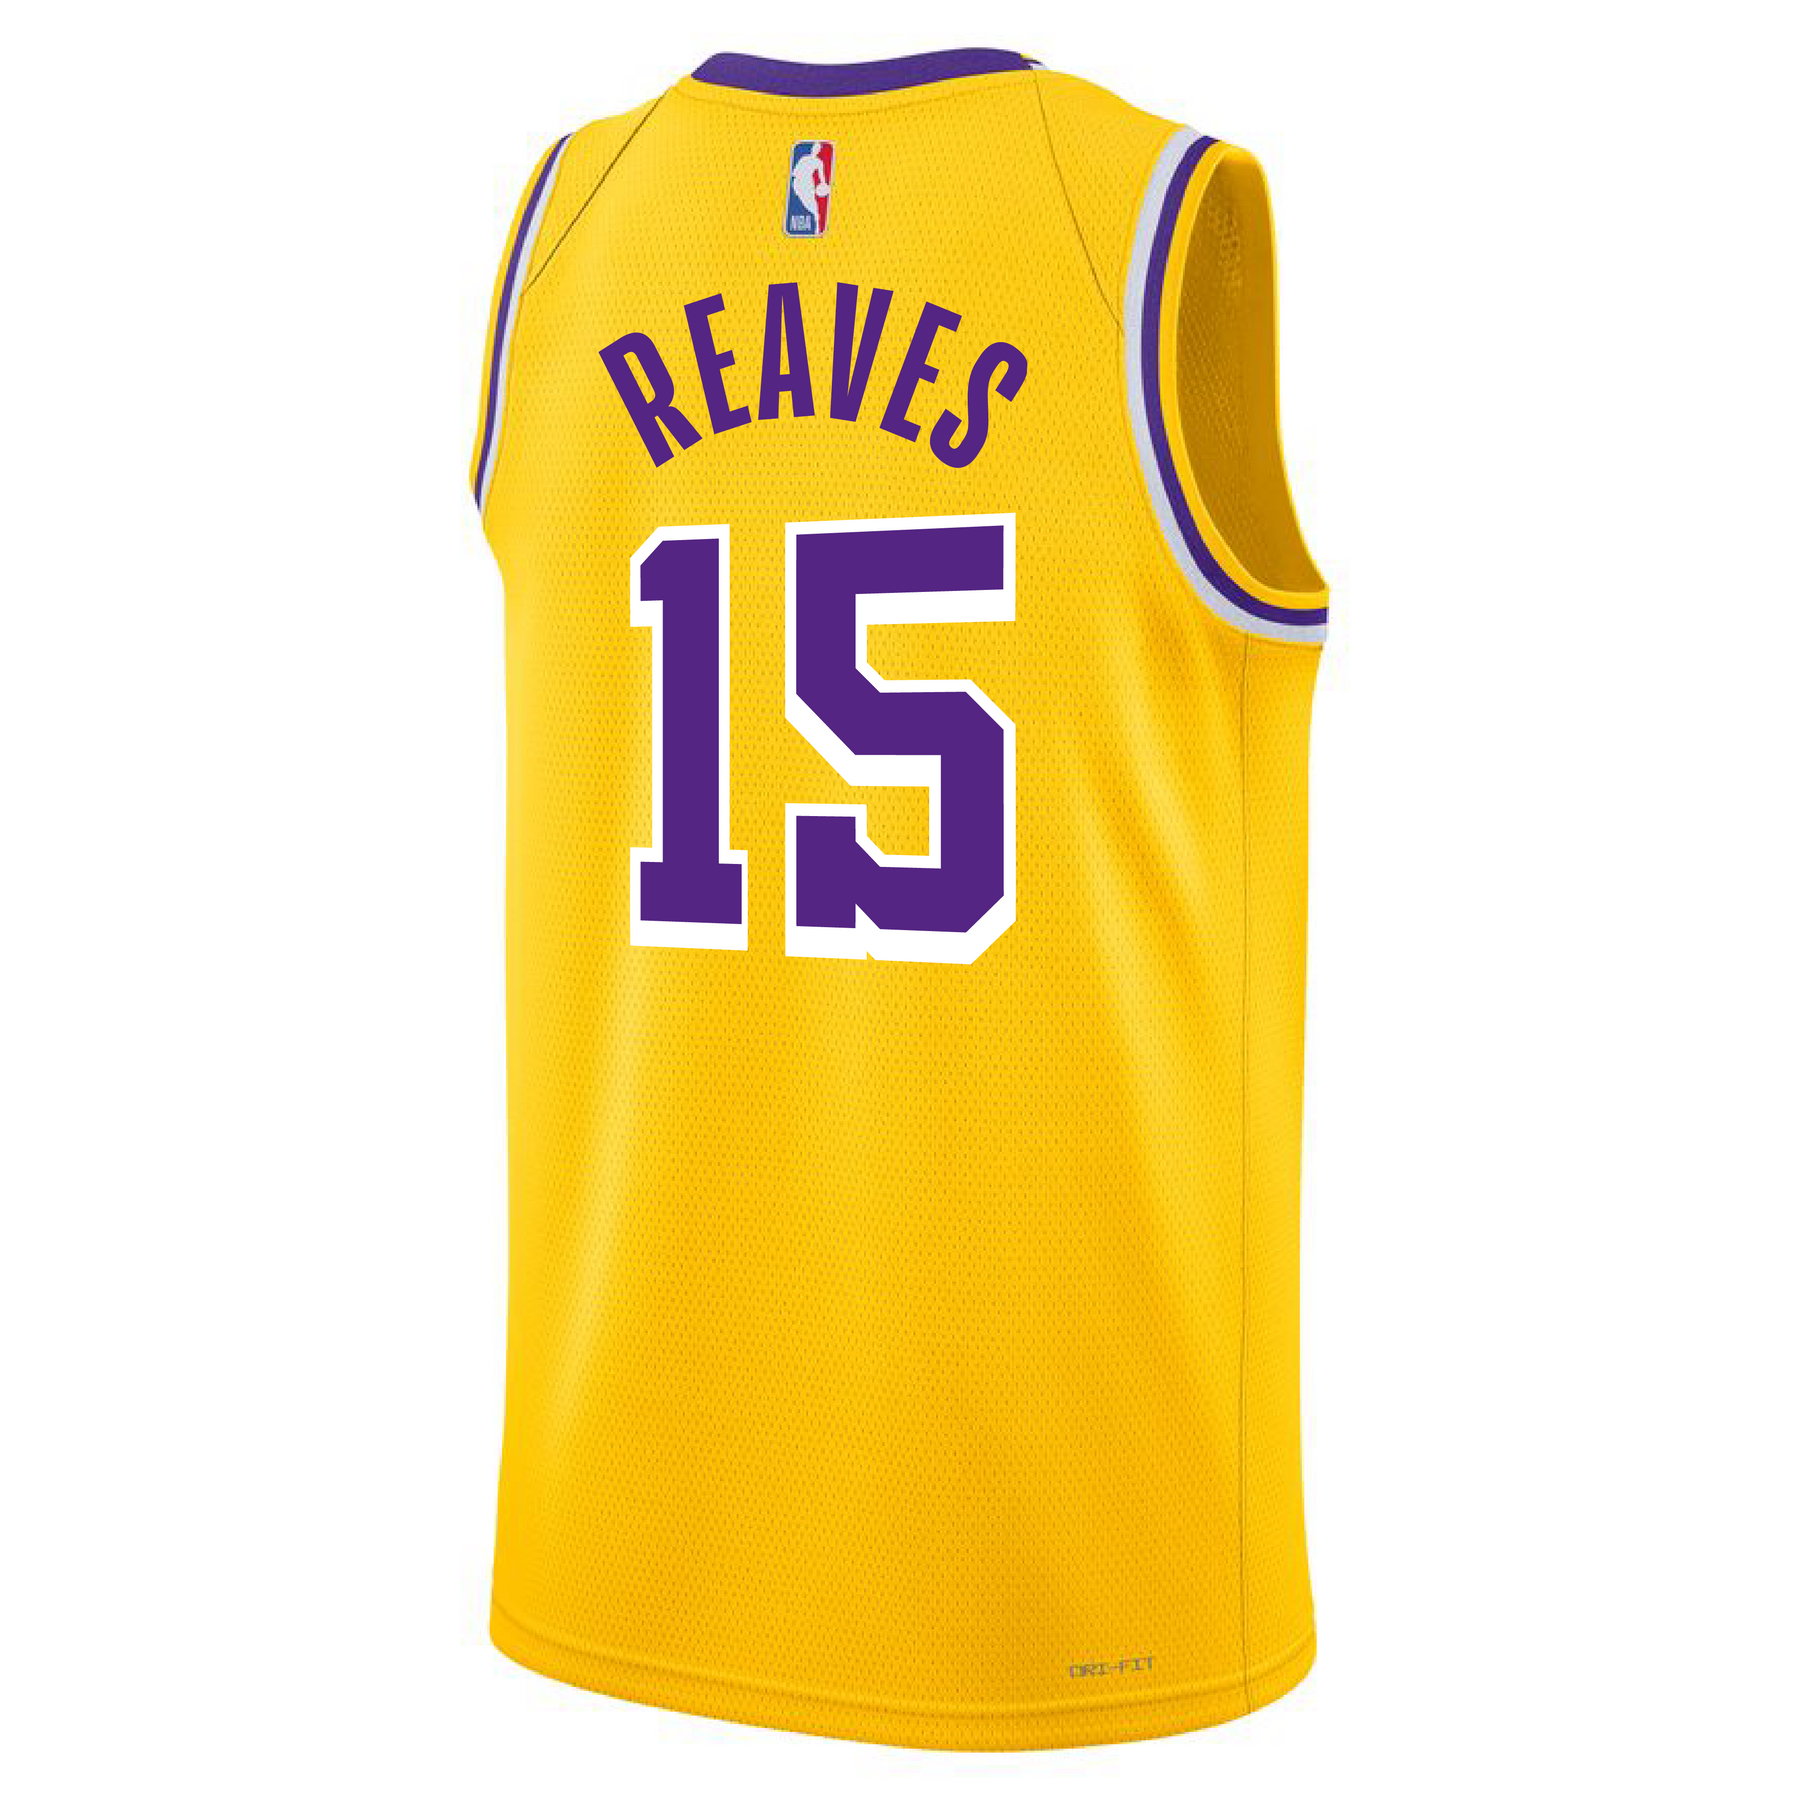 Lakers Trikot online kaufen